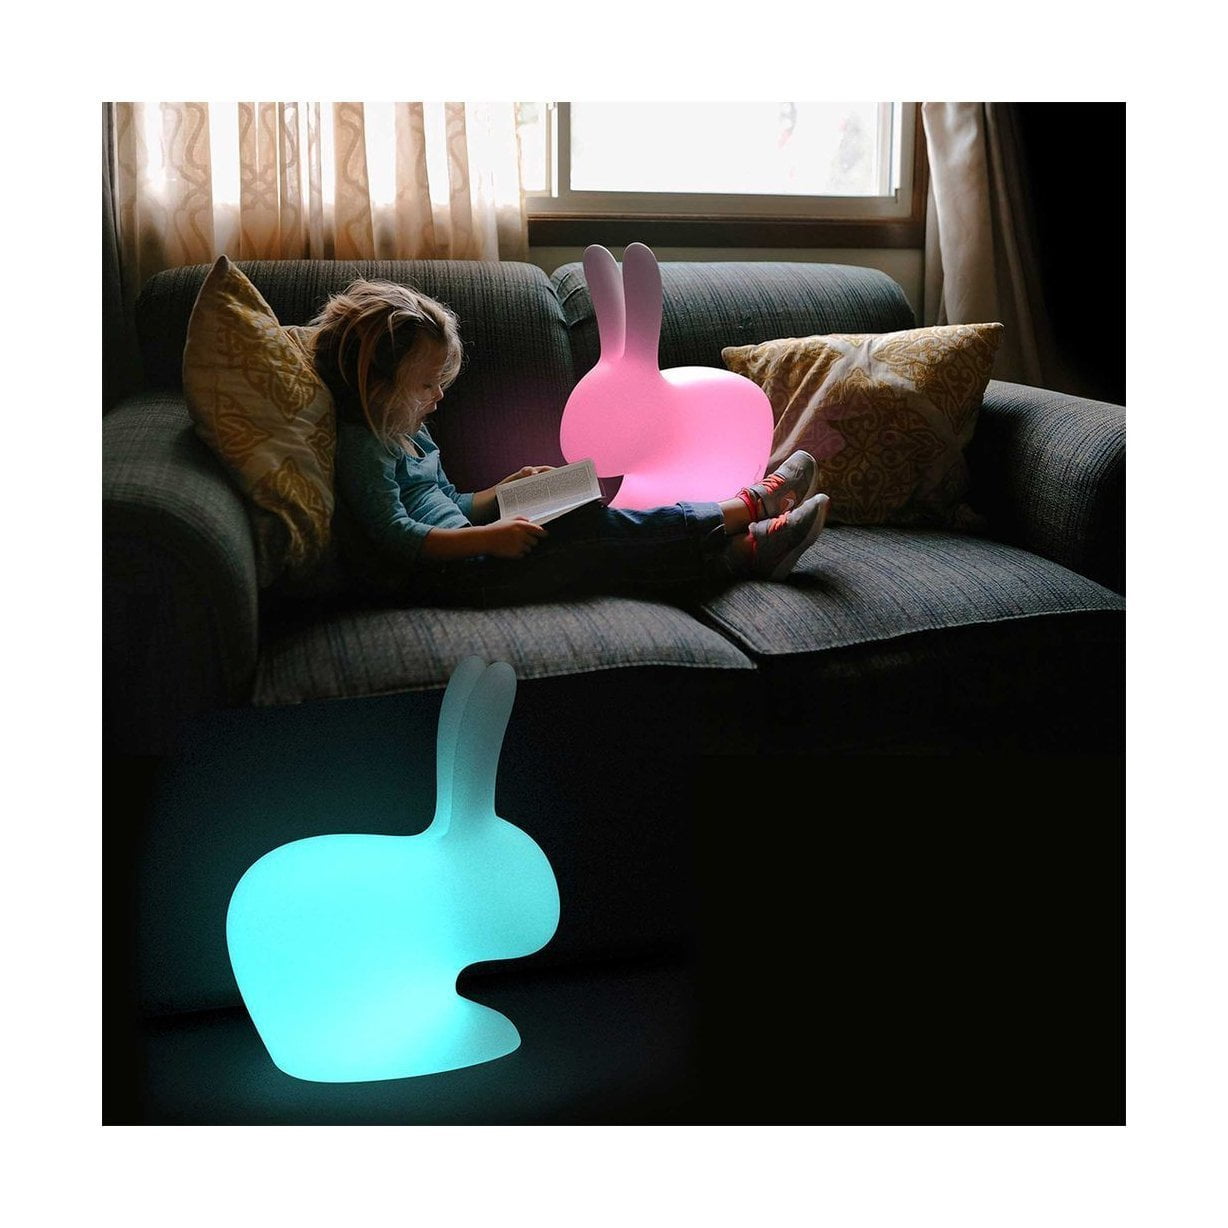 QEEBOO Rabbit LED LED RESTARTABLAble, S.